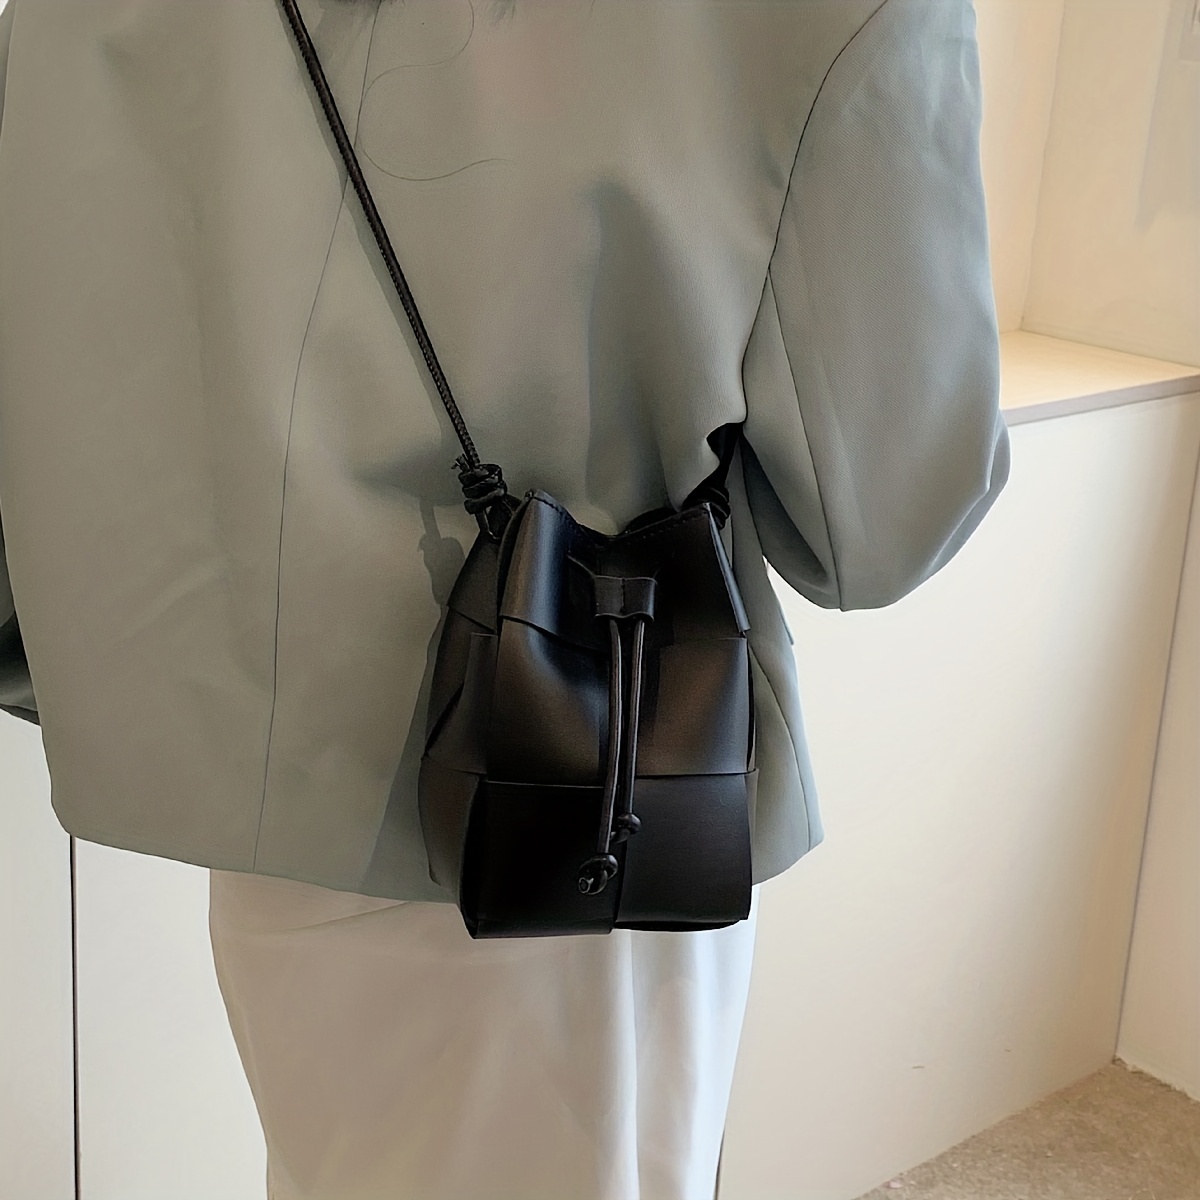 Charles & Keith - Women's Braided Bag Strap, Beige, R